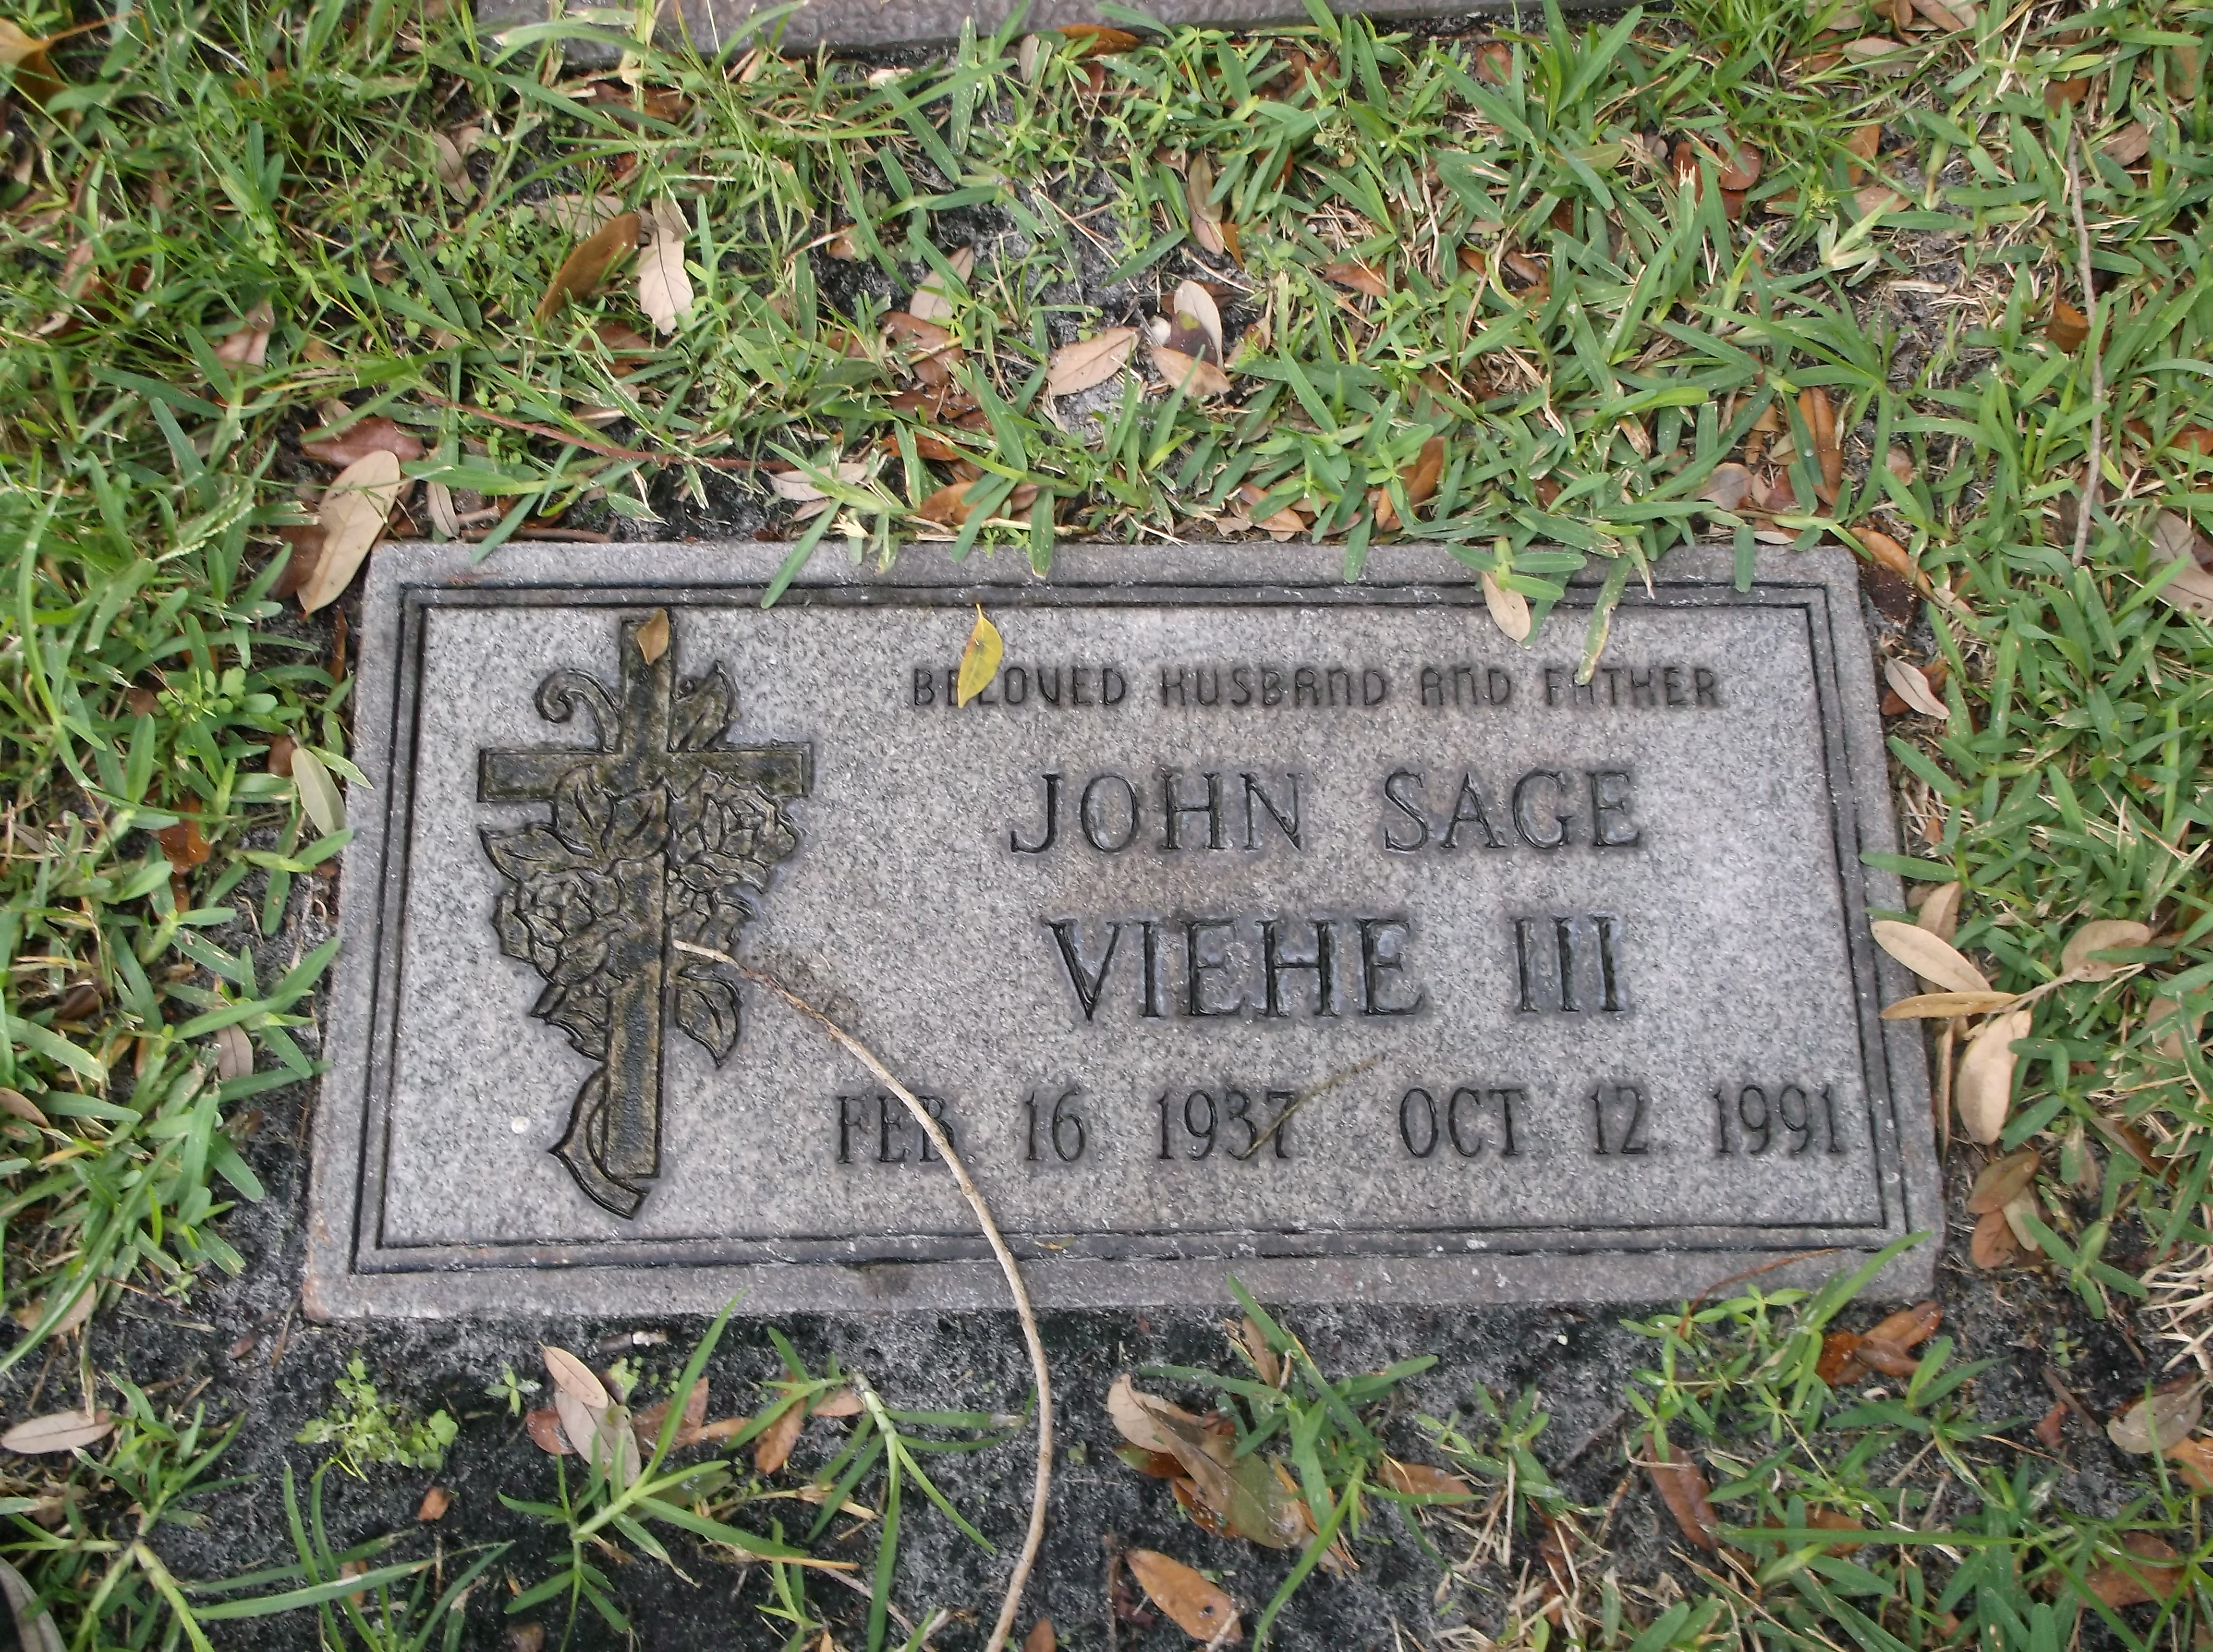 John Sage Viehe, III